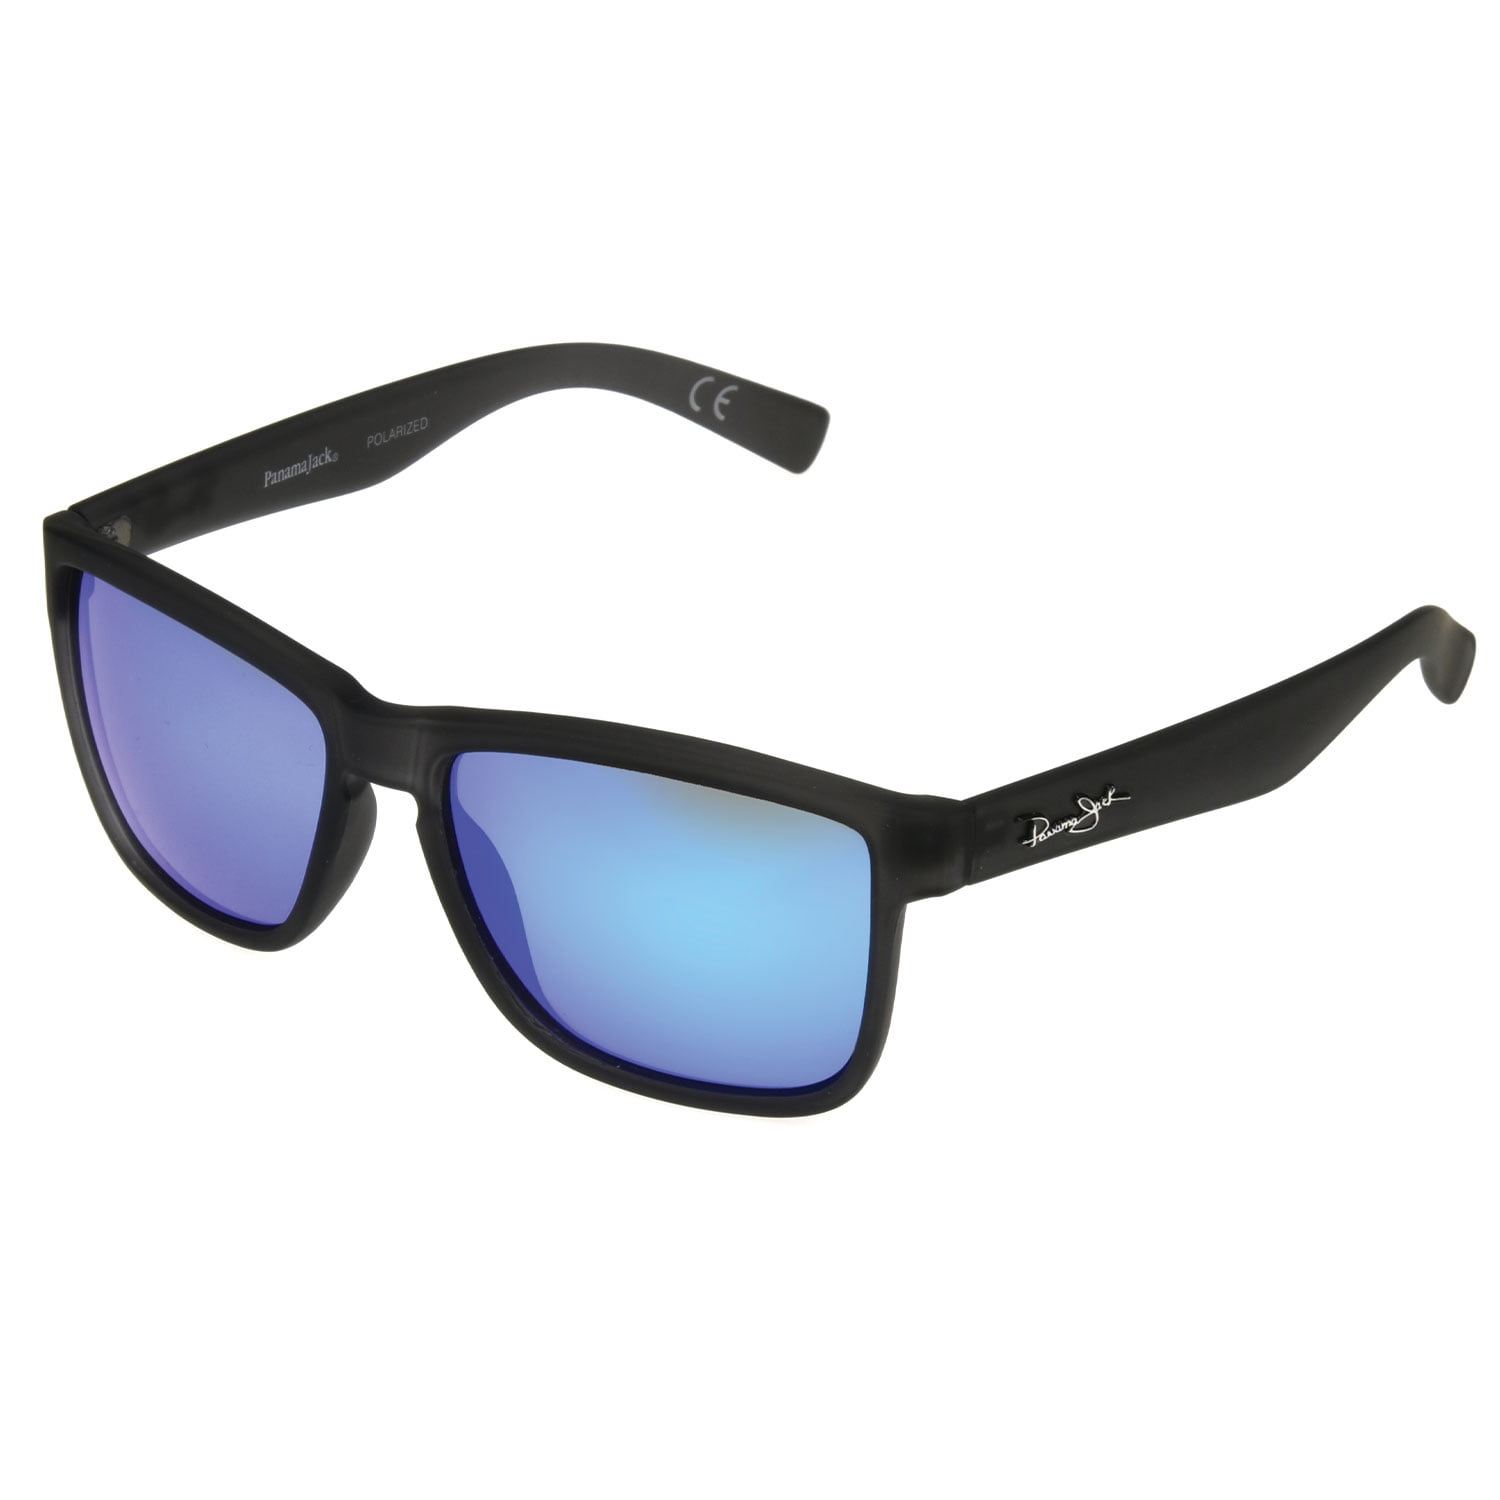 Quay Australia Sunglasses - Cherry 56mm Brow Bar - Black/Purple